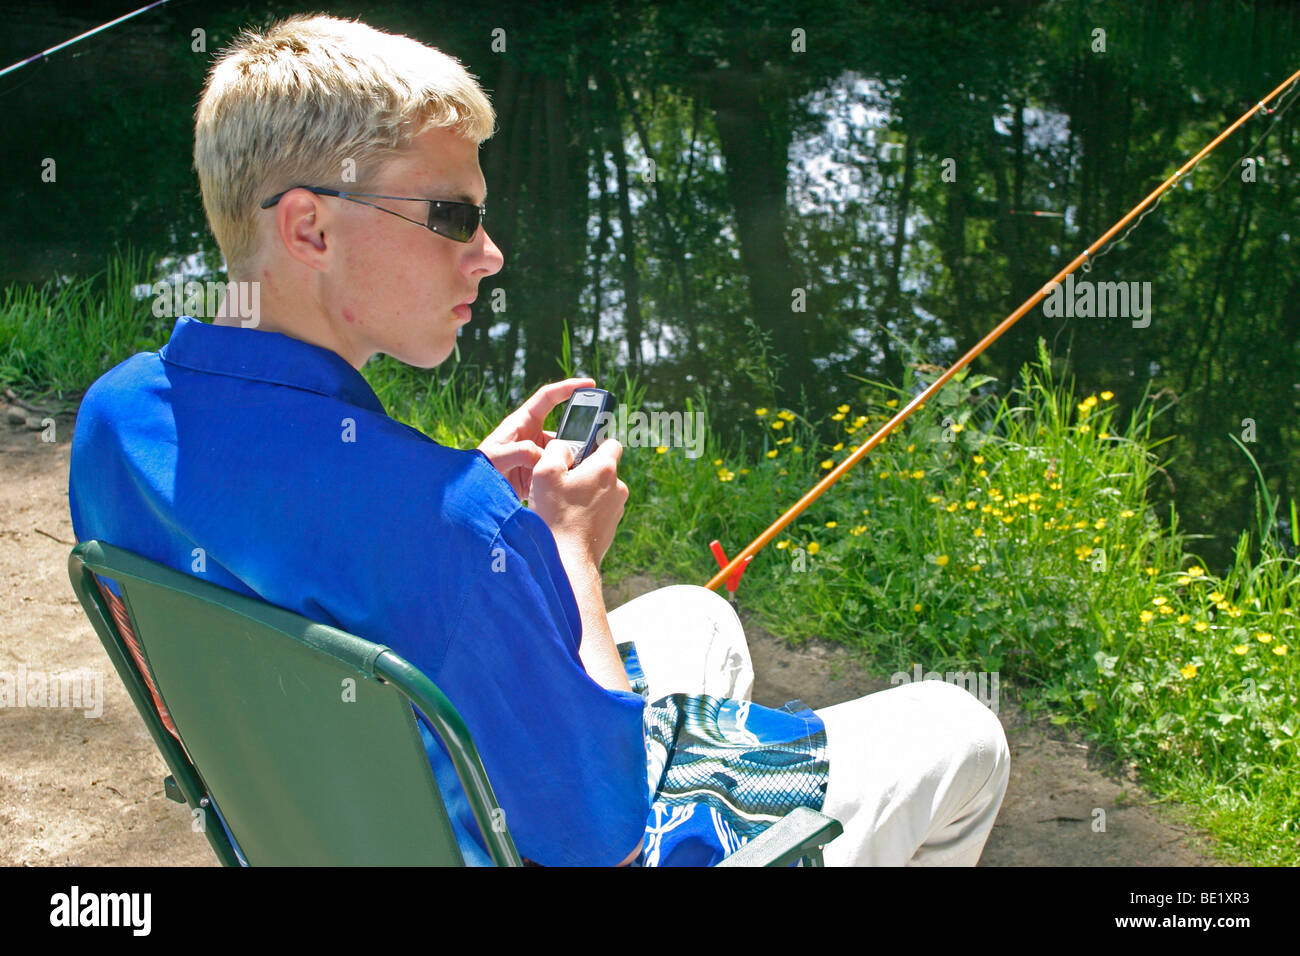 https://c8.alamy.com/comp/BE1XR3/teenage-boy-fishing-BE1XR3.jpg